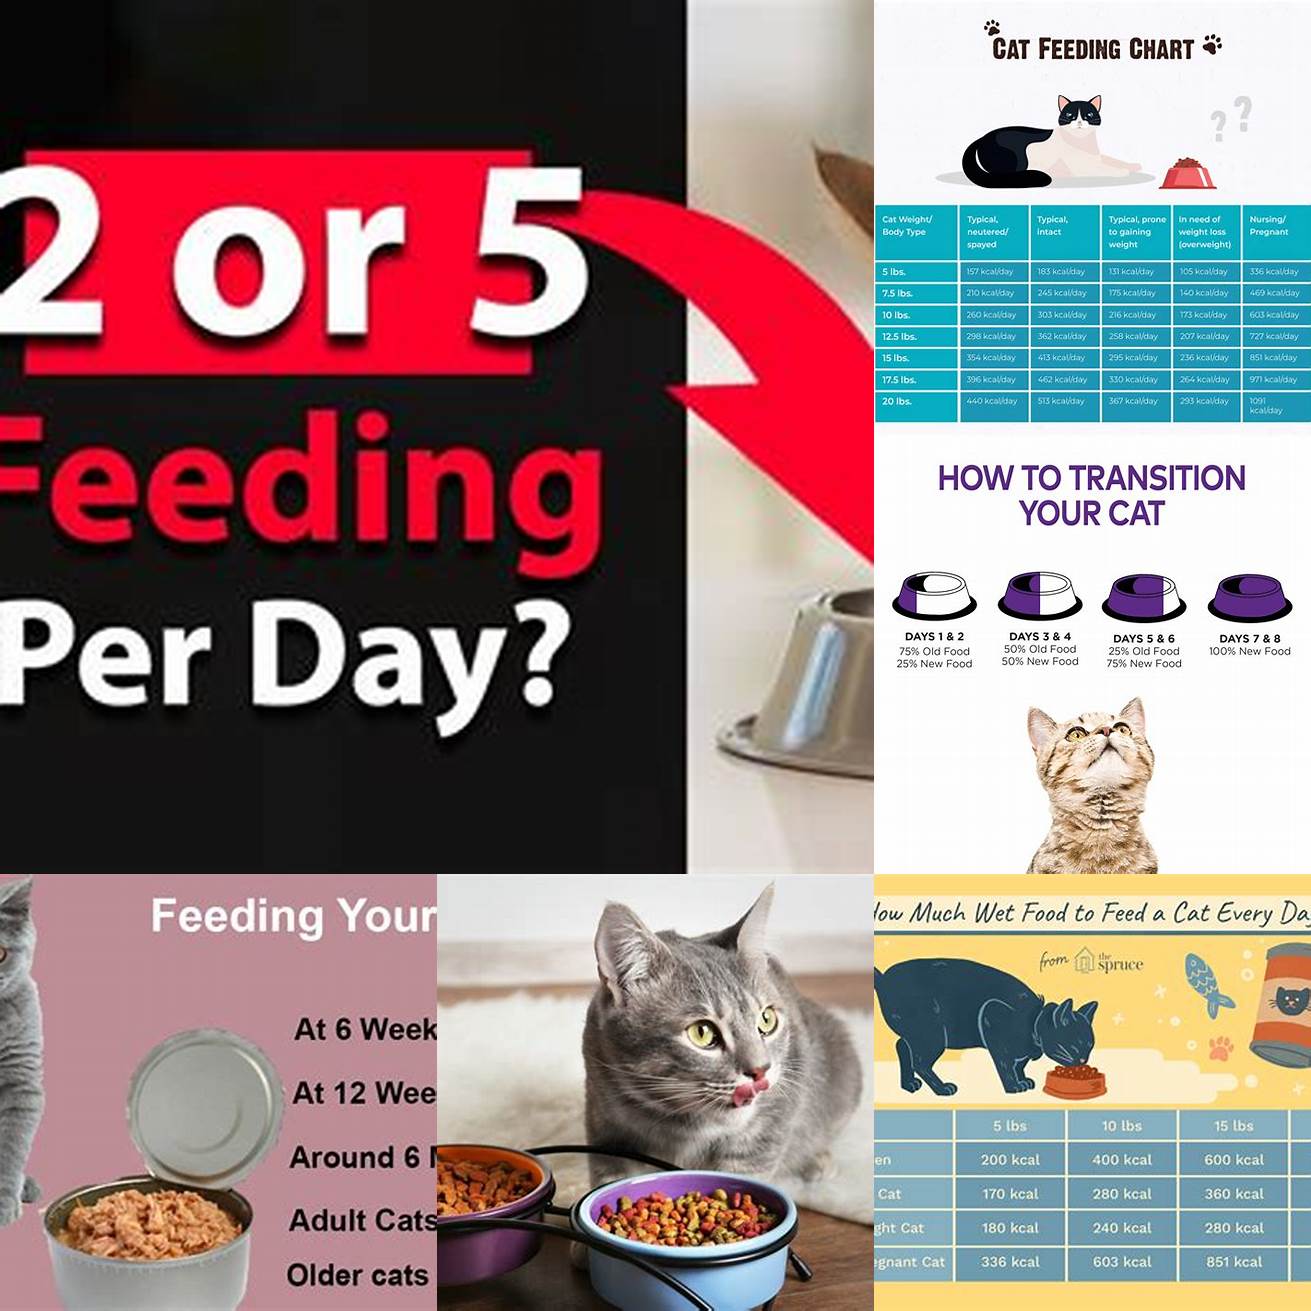 Q How often should I feed my cat